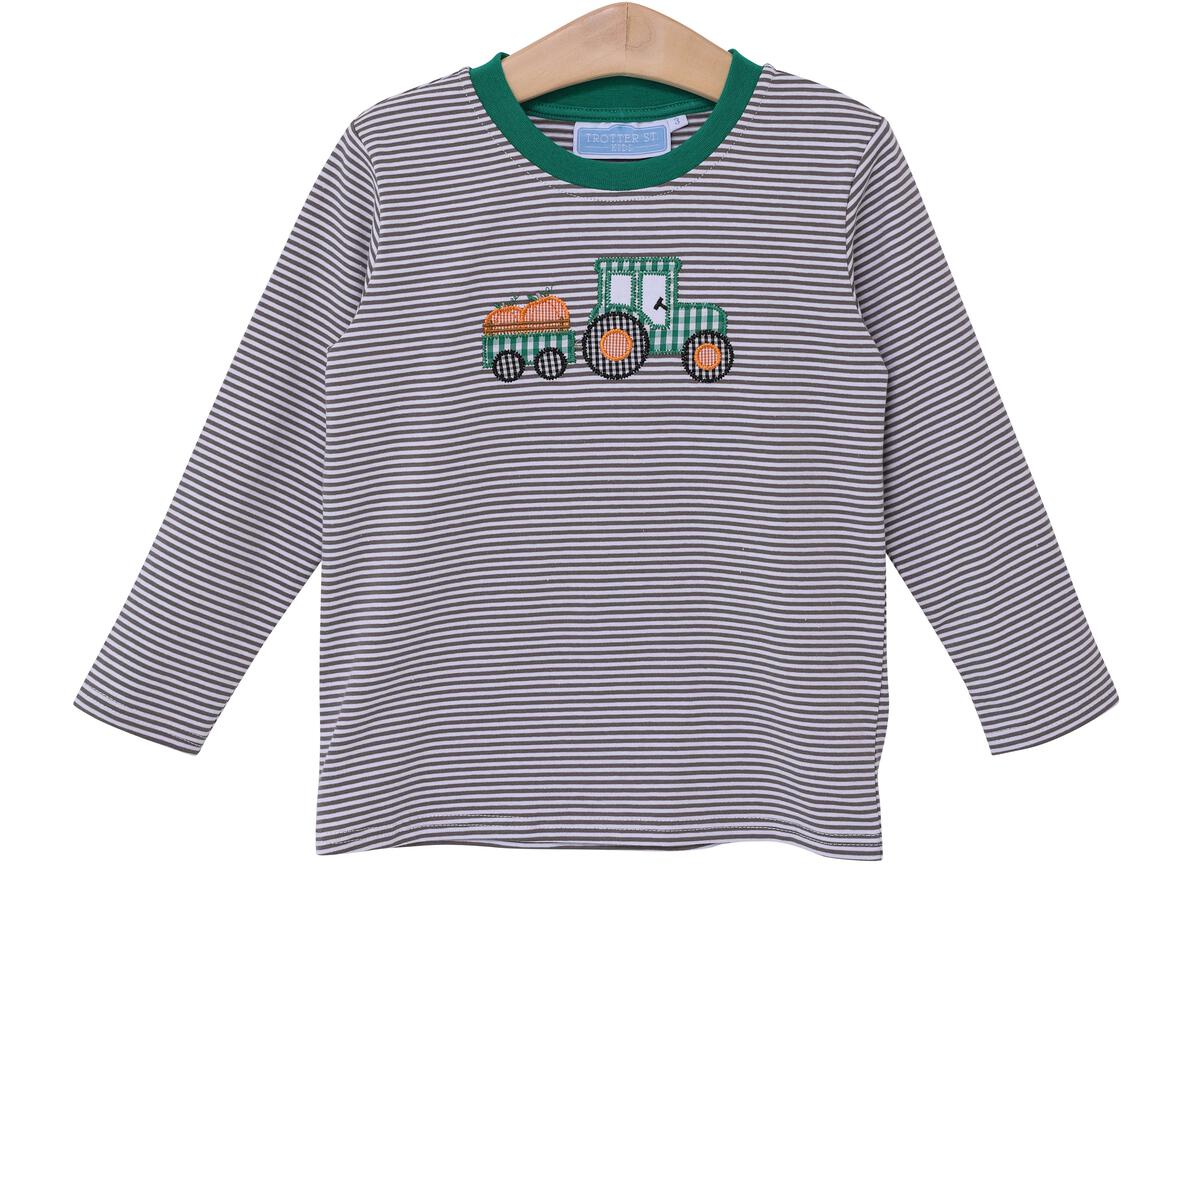 Tractor Pumpkin Applique Shirt  - Doodlebug's Children's Boutique